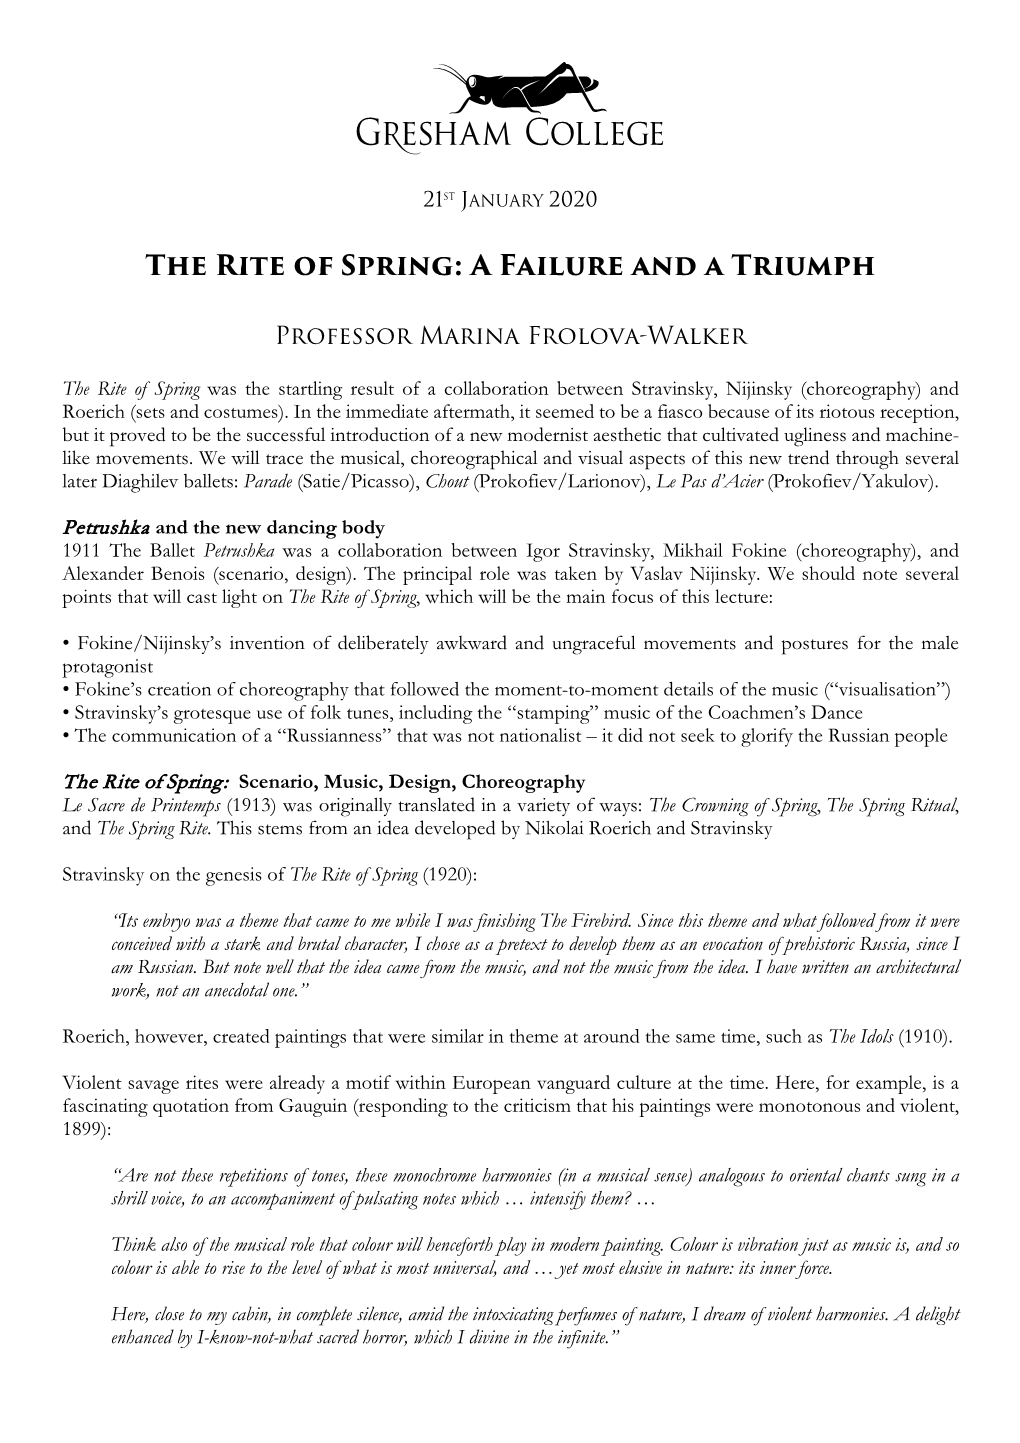 The Rite of Spring: a Failure and a Triumph